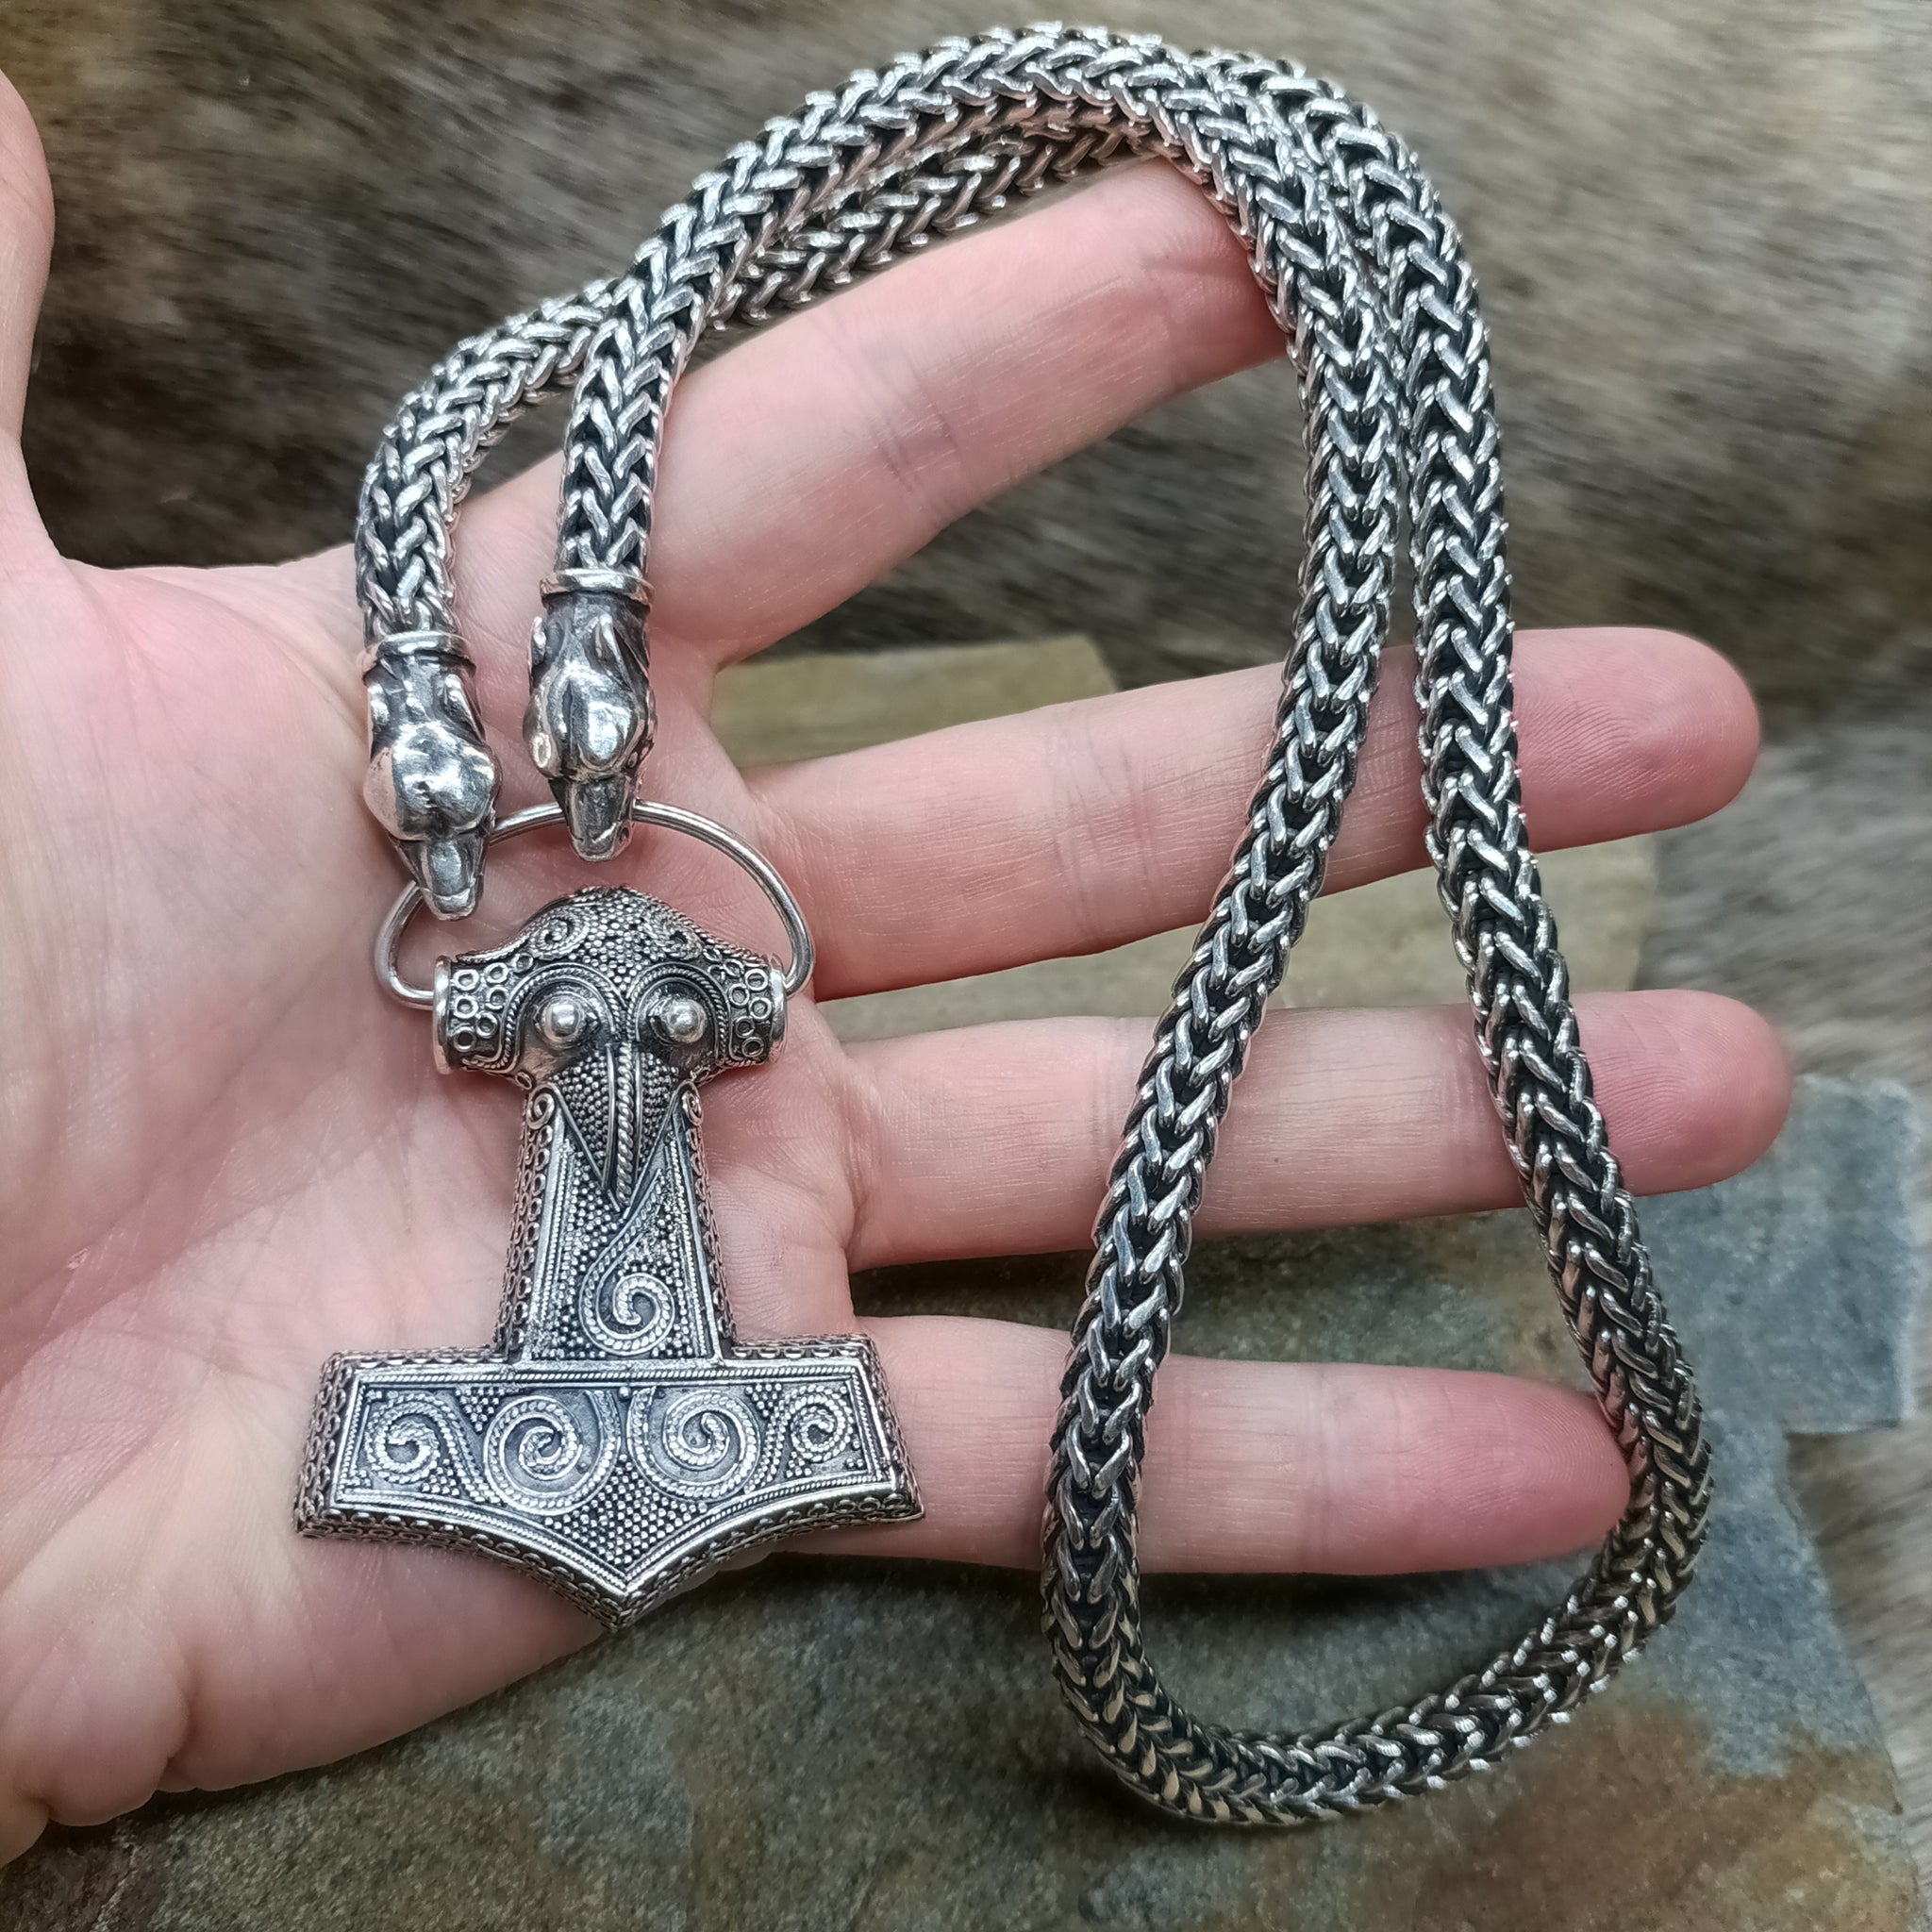 THOR'S MJOLNIR HAMMER Chain Locket for Men's and Boys | Aluminium steel  with Chrome finish|